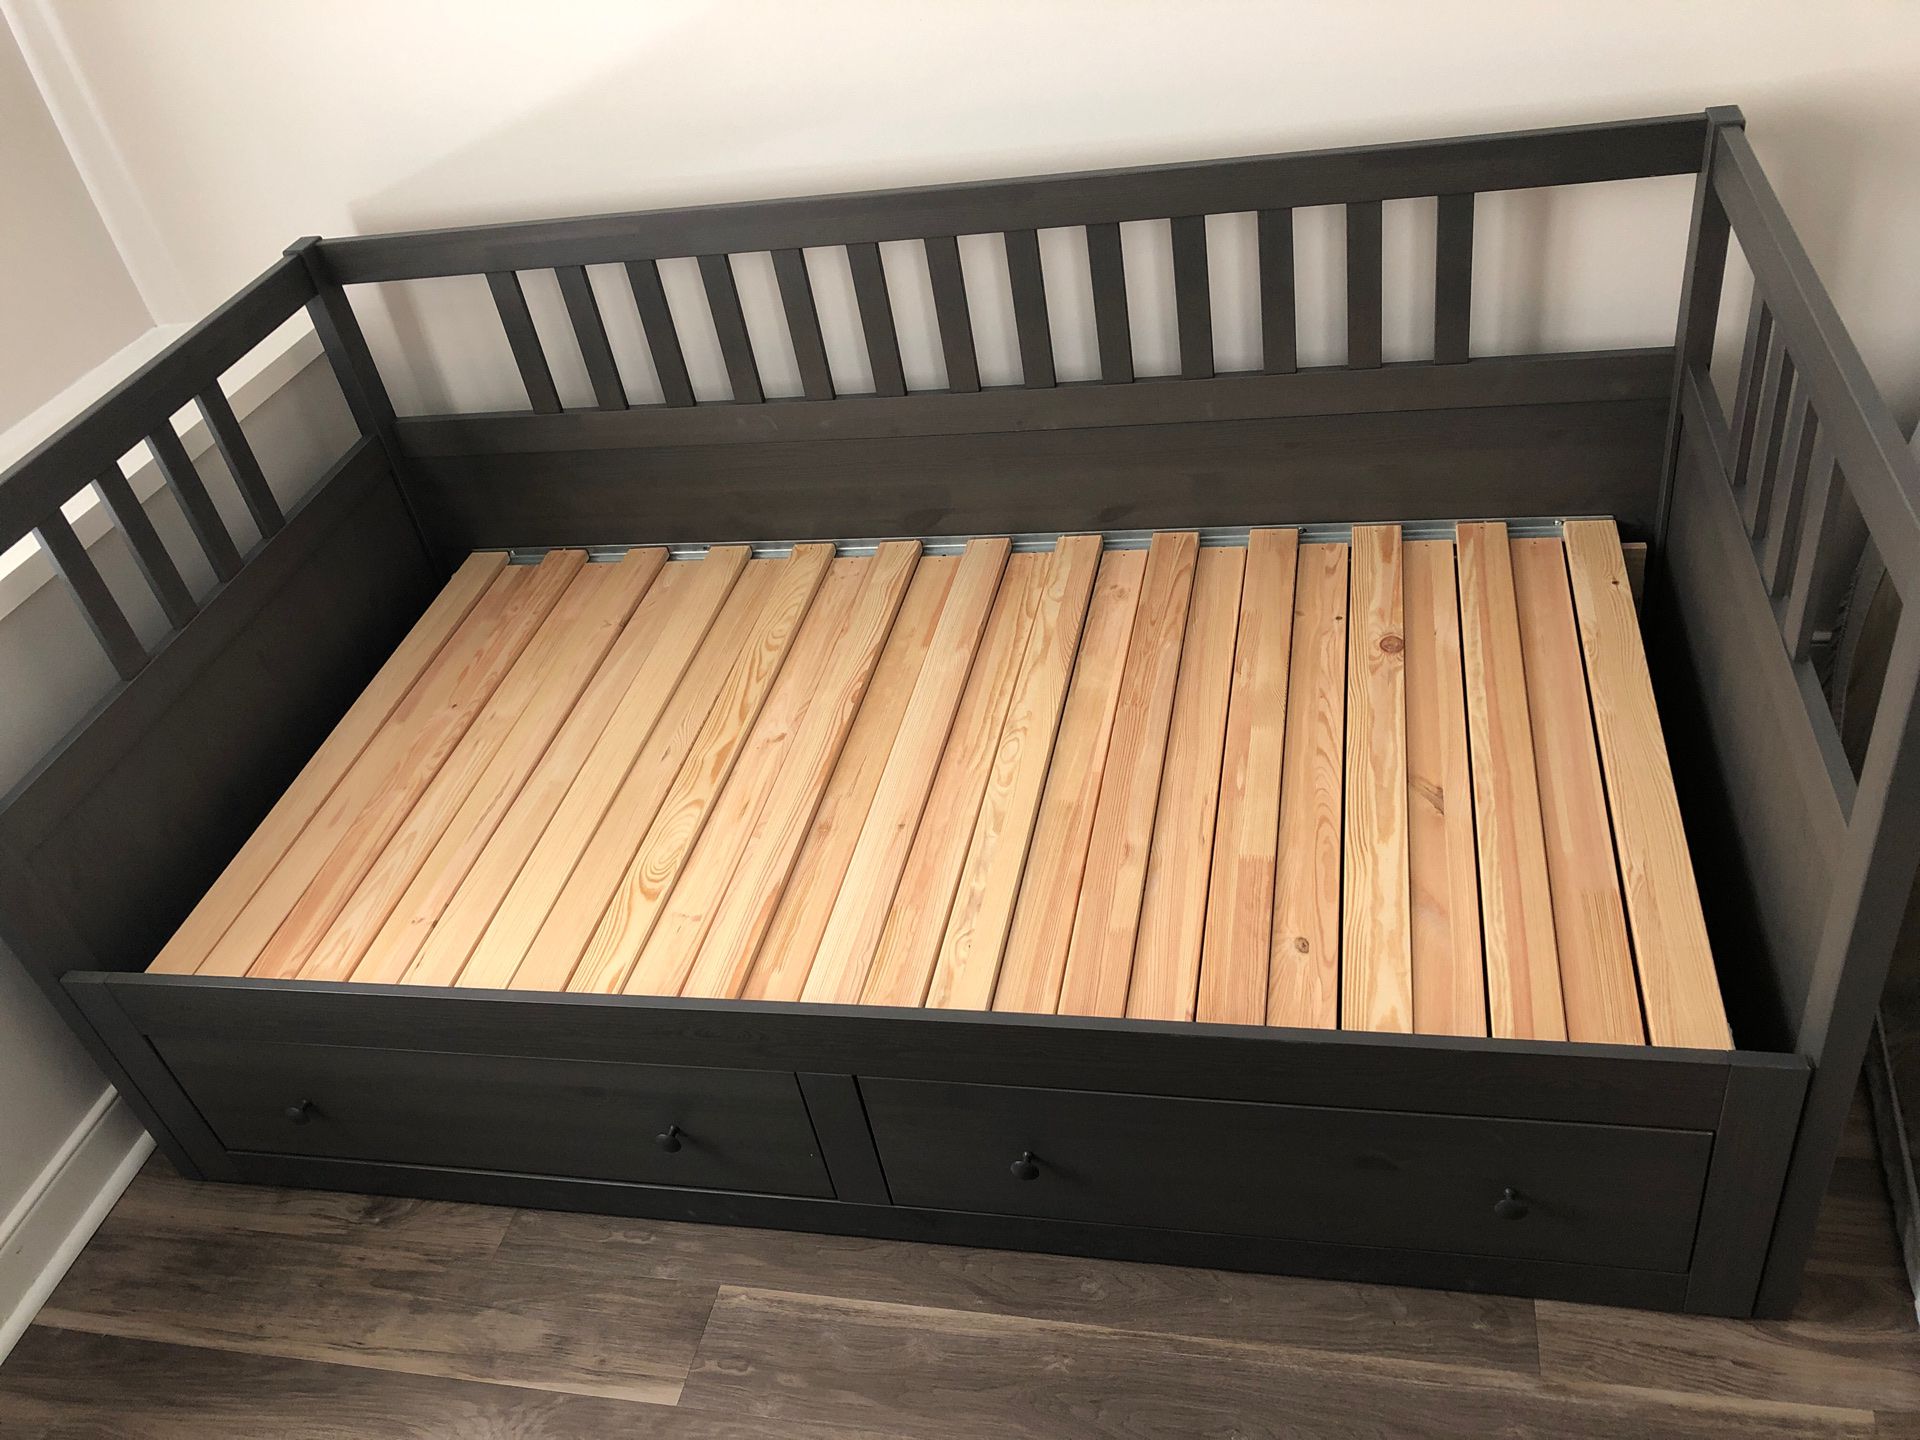 IKEA trendle bed